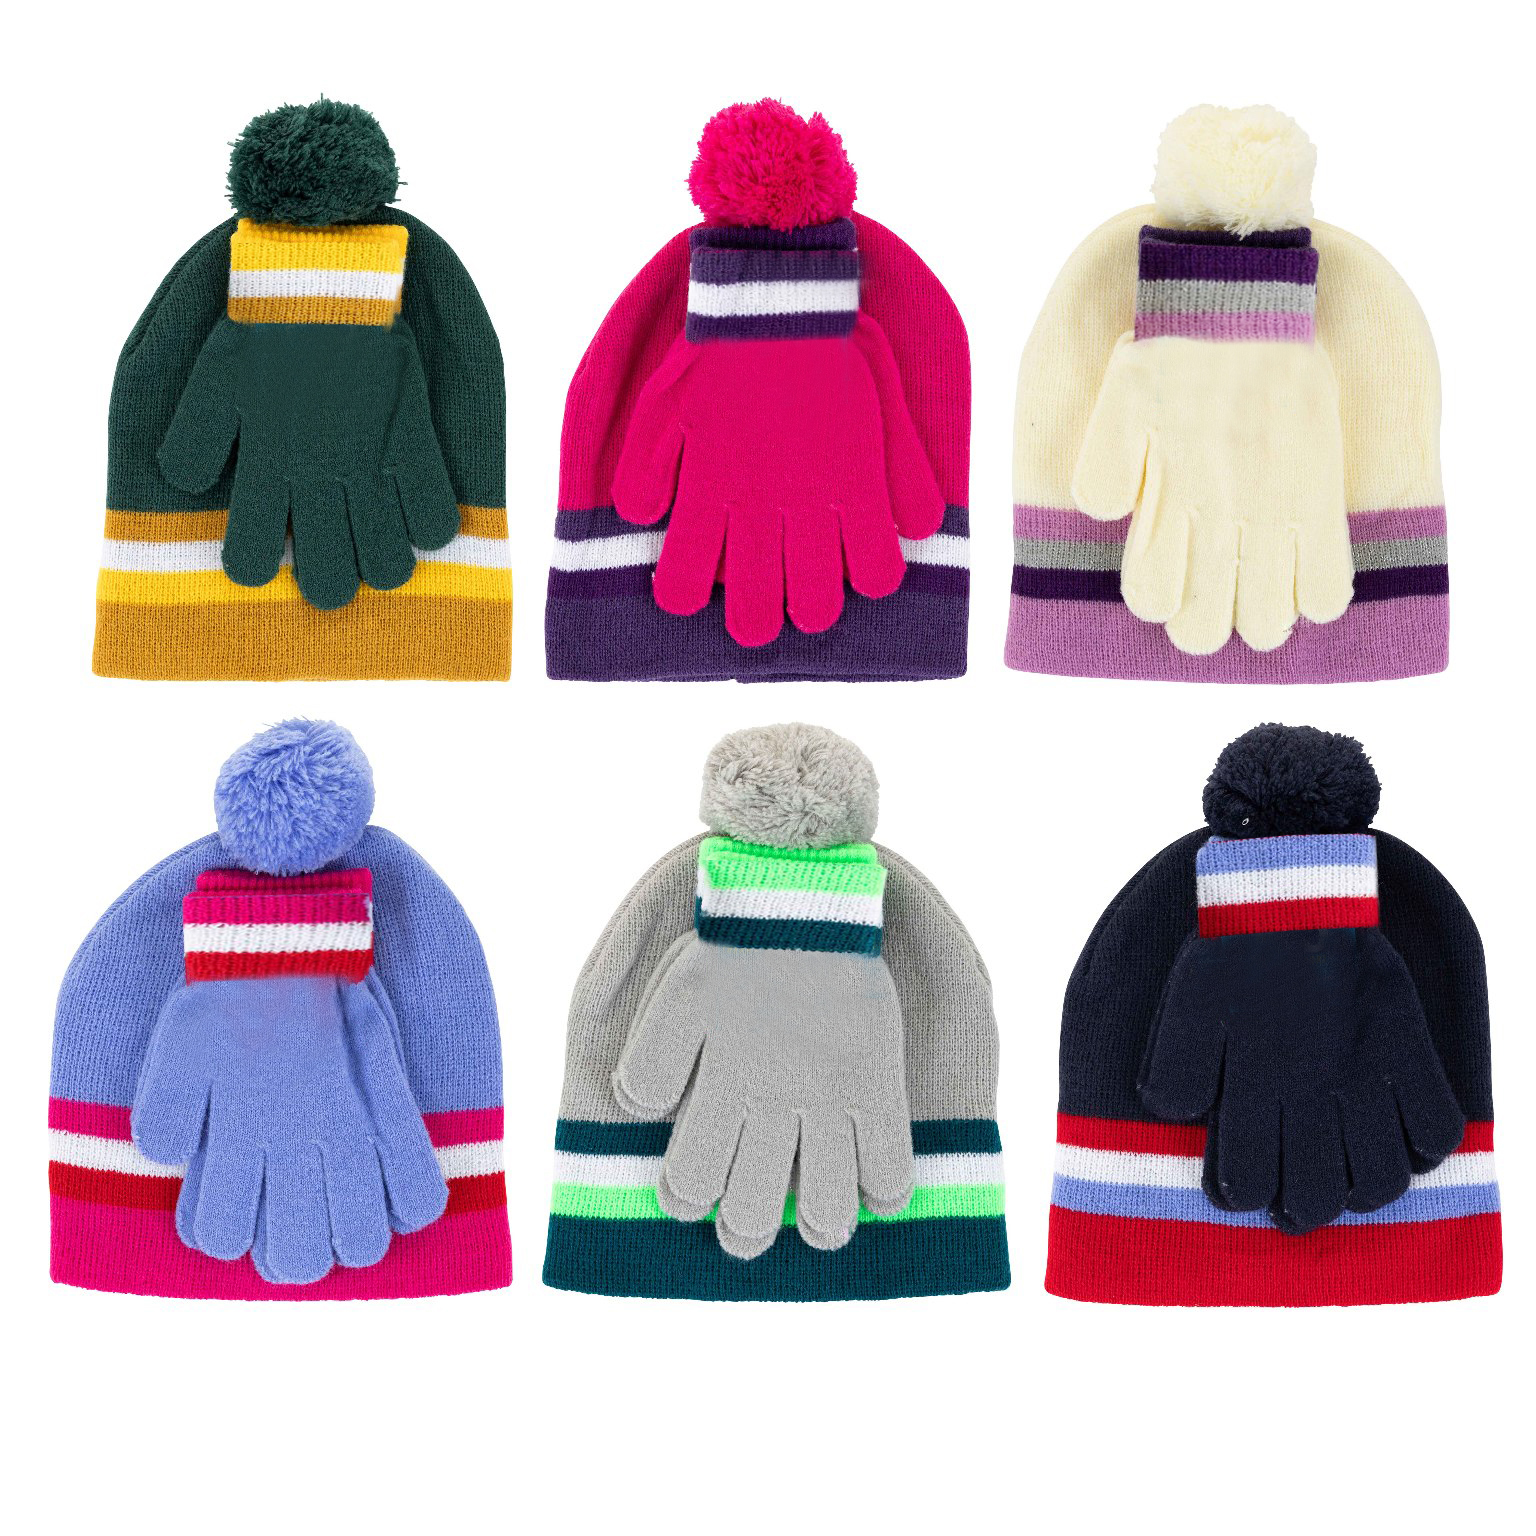 Bulk Kids Knit Hat And Glove Sets Assorted Color Block Dollardays